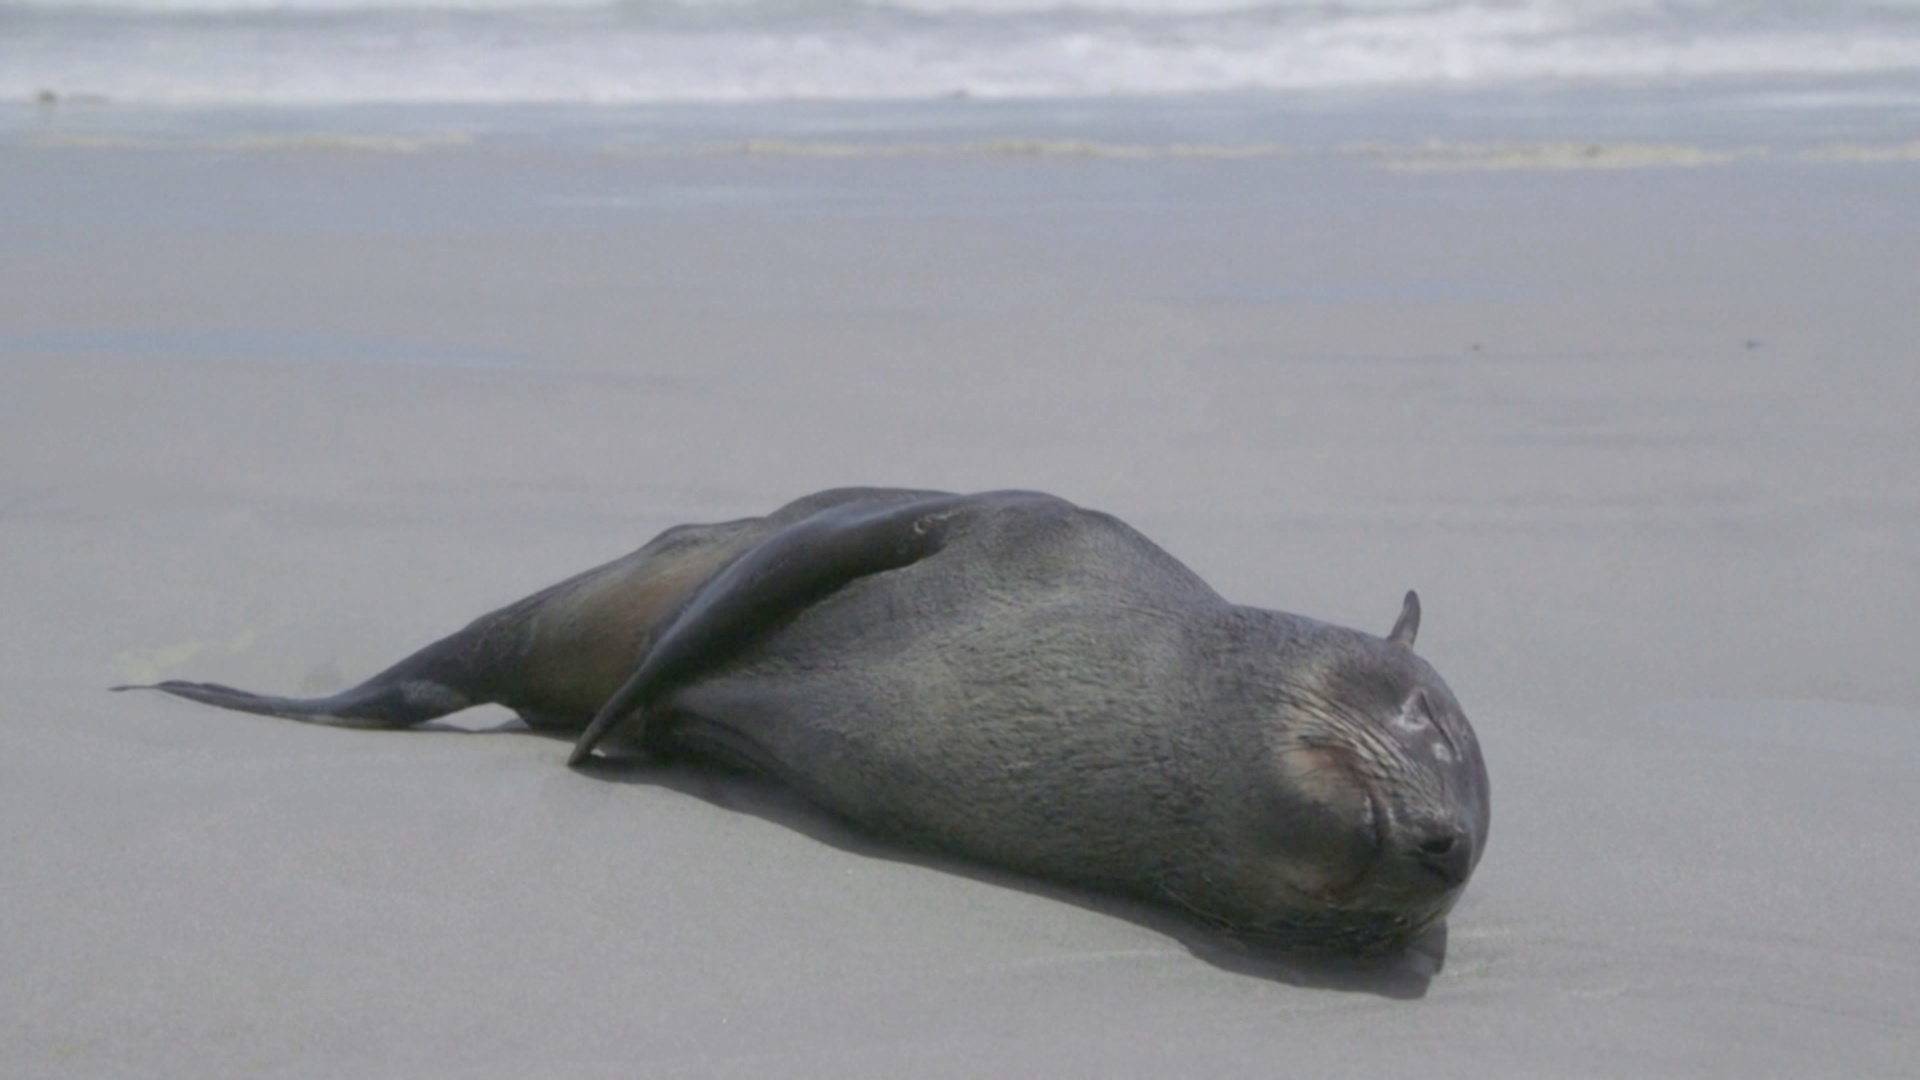 На побережье ЮАР массово гибнут тюлени